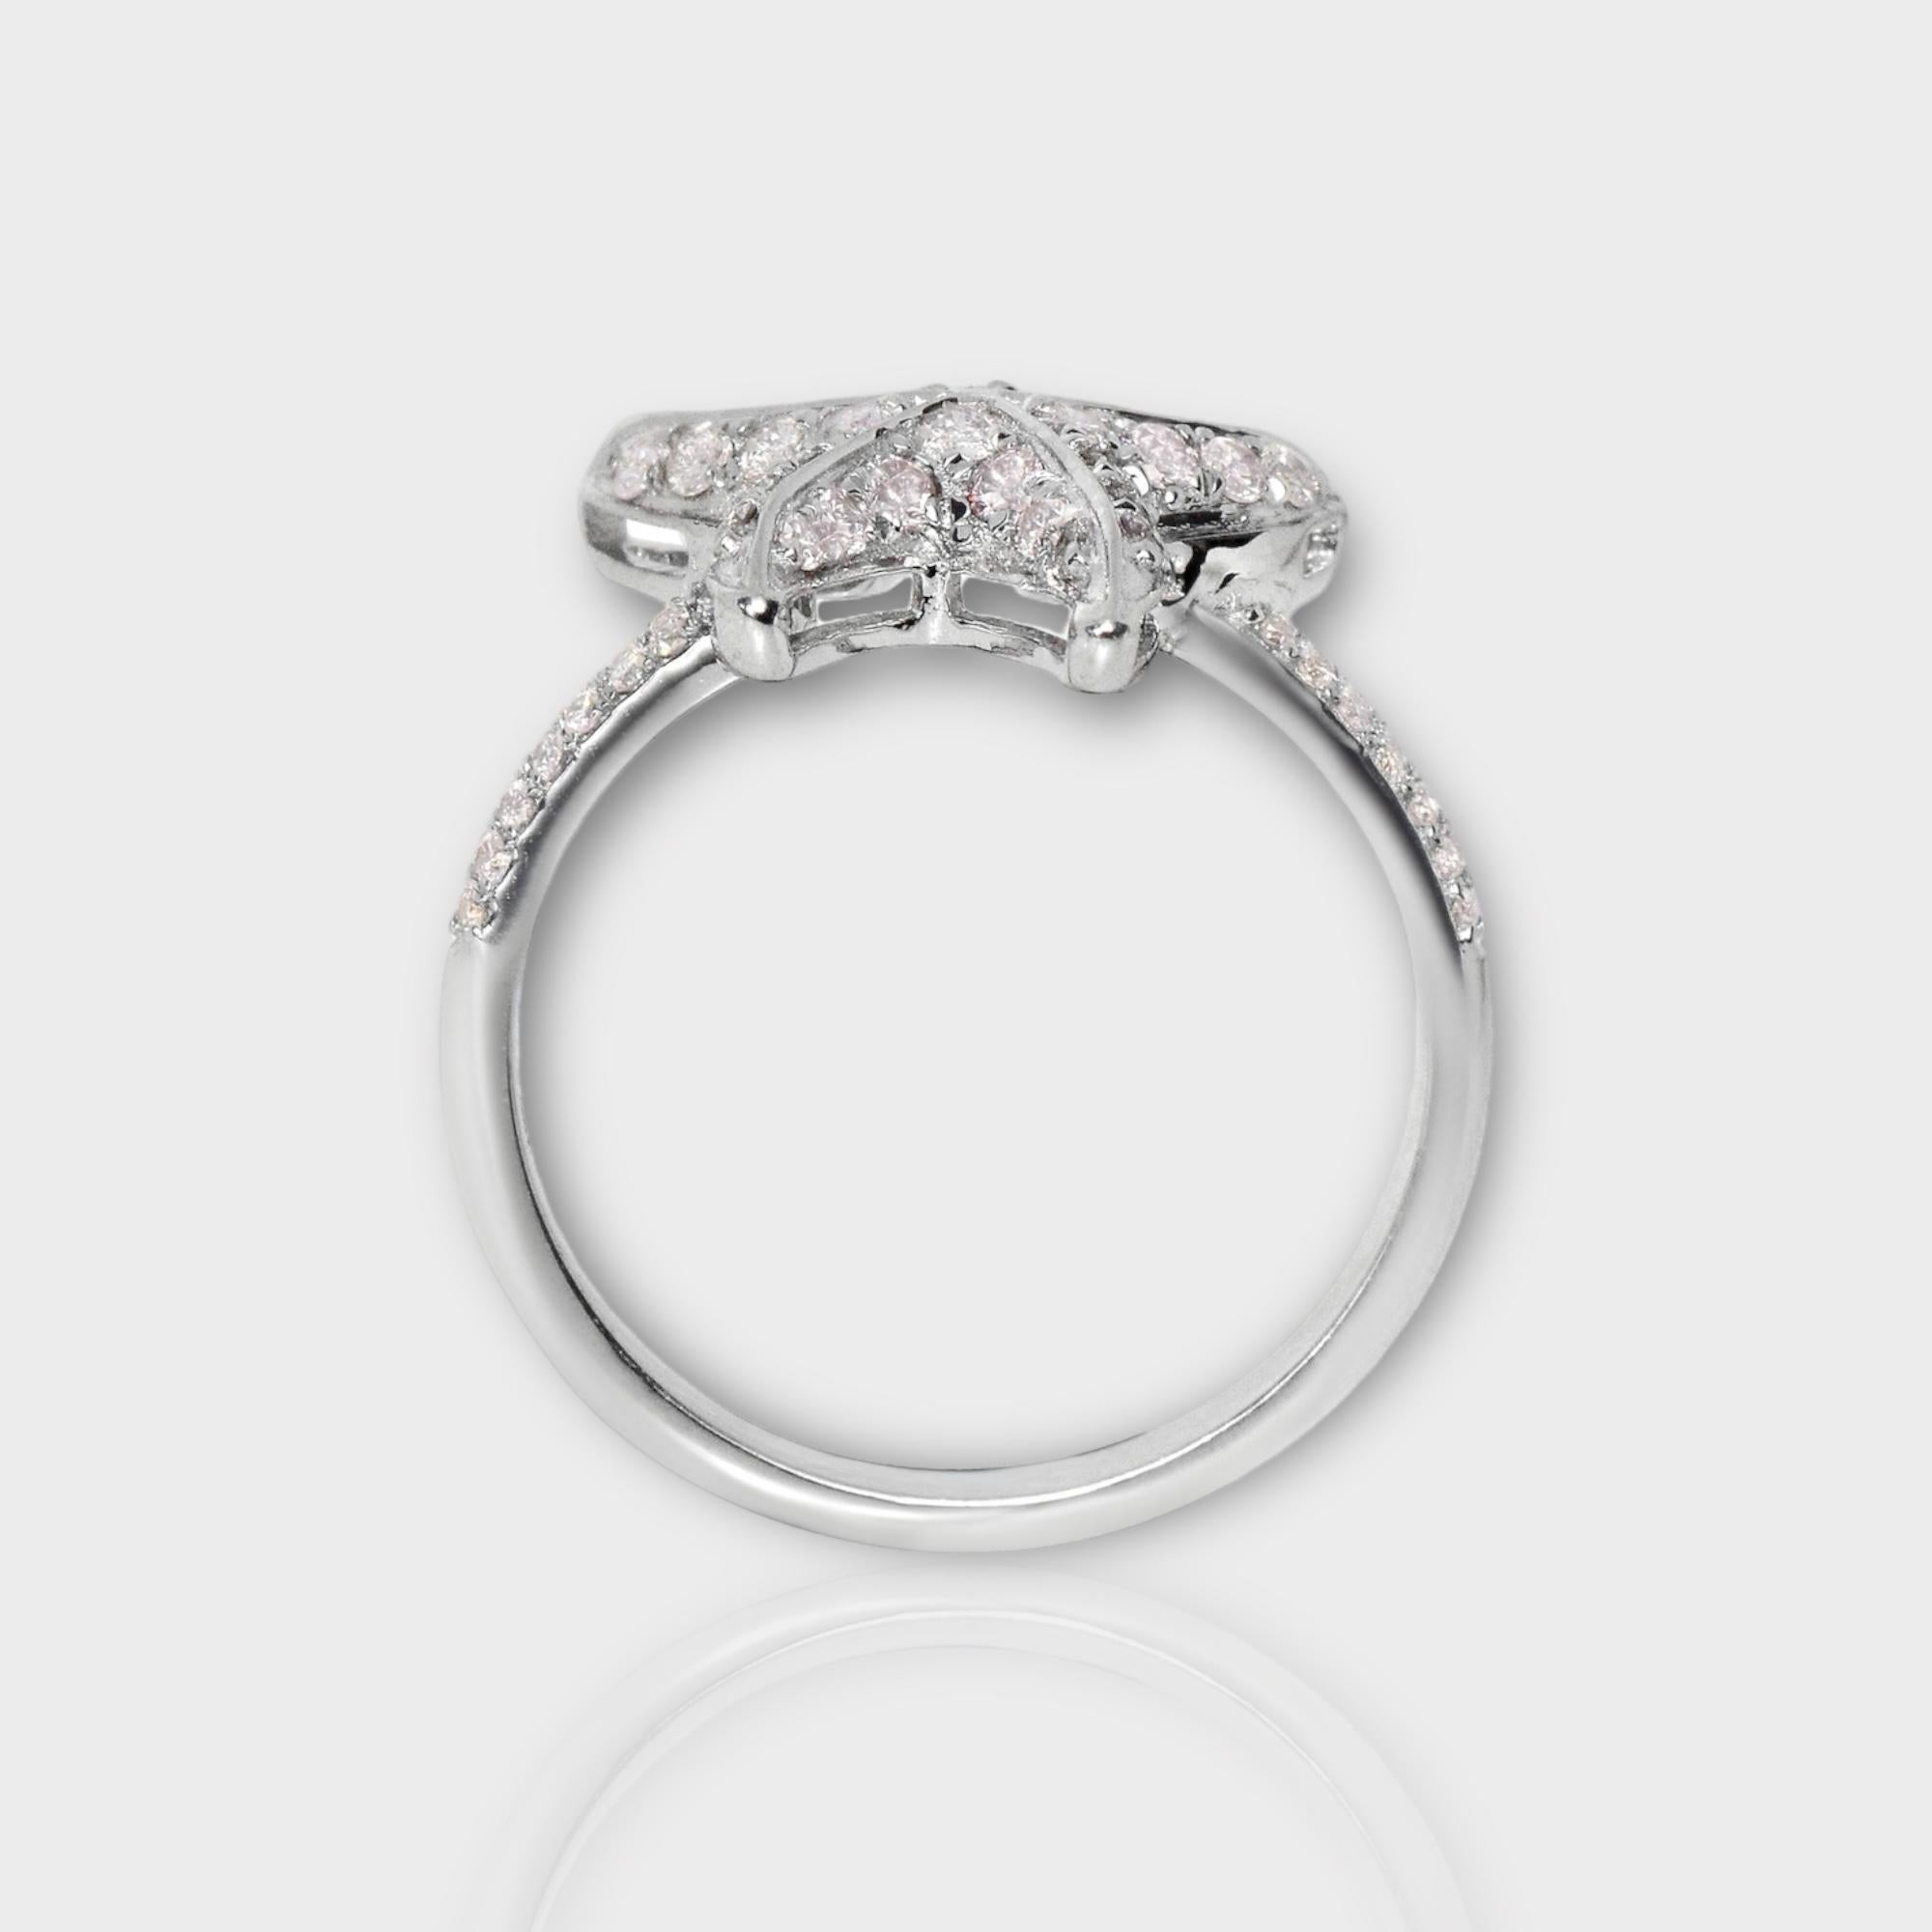 IGI 14K 0.58 ct Natural Pink Diamonds Sea Star Design Antique Art Deco Ring For Sale 1